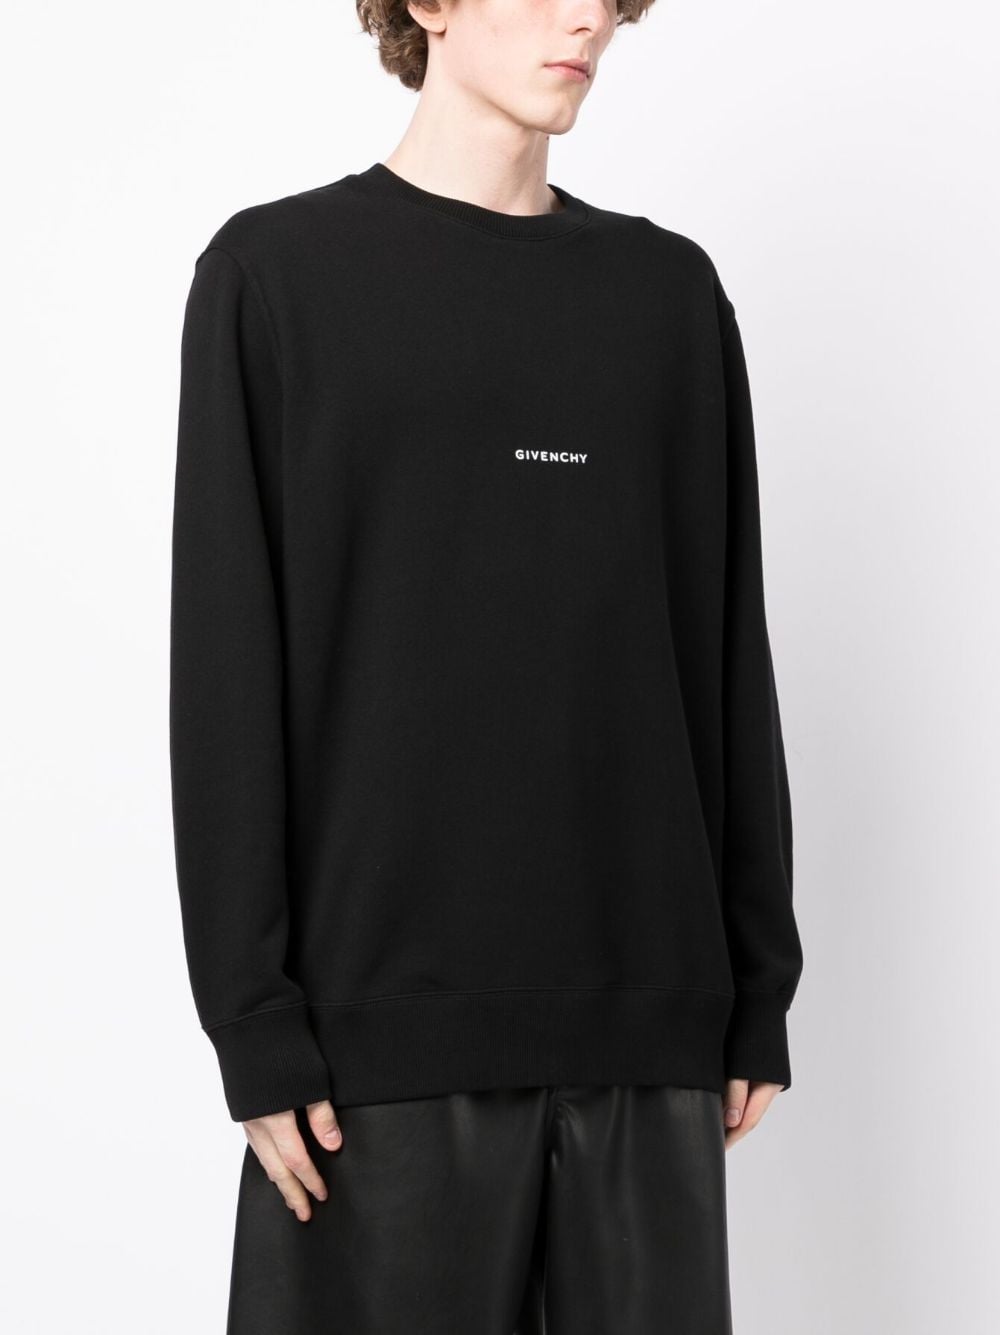 Givenchy Sweater met logoprint Zwart